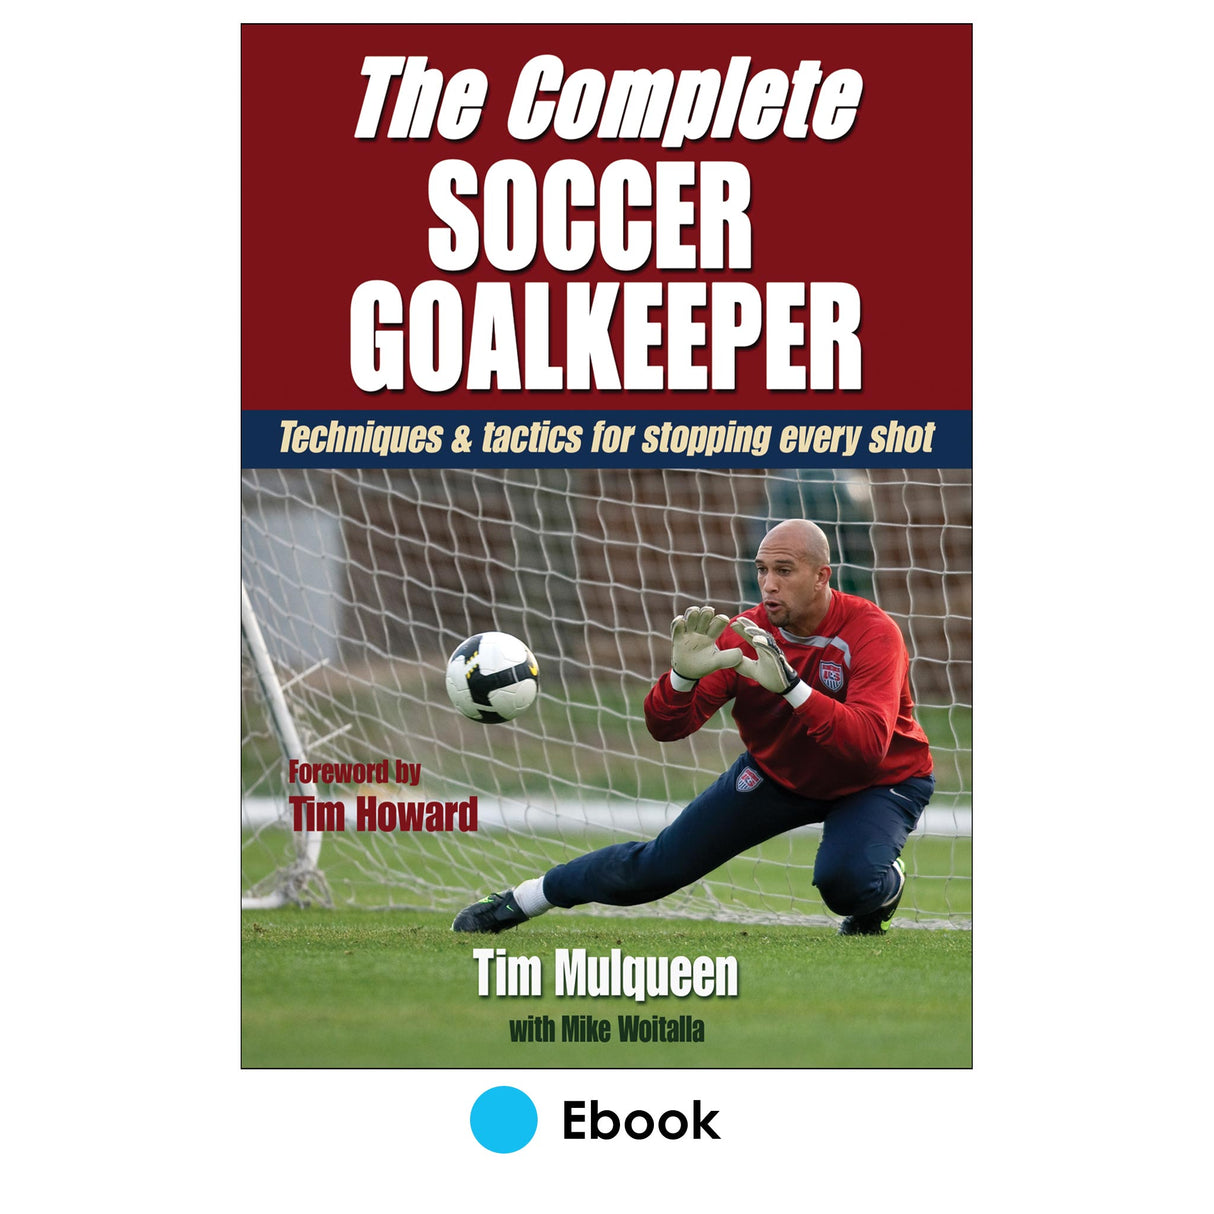 Complete Soccer Goalkeeper PDF, The